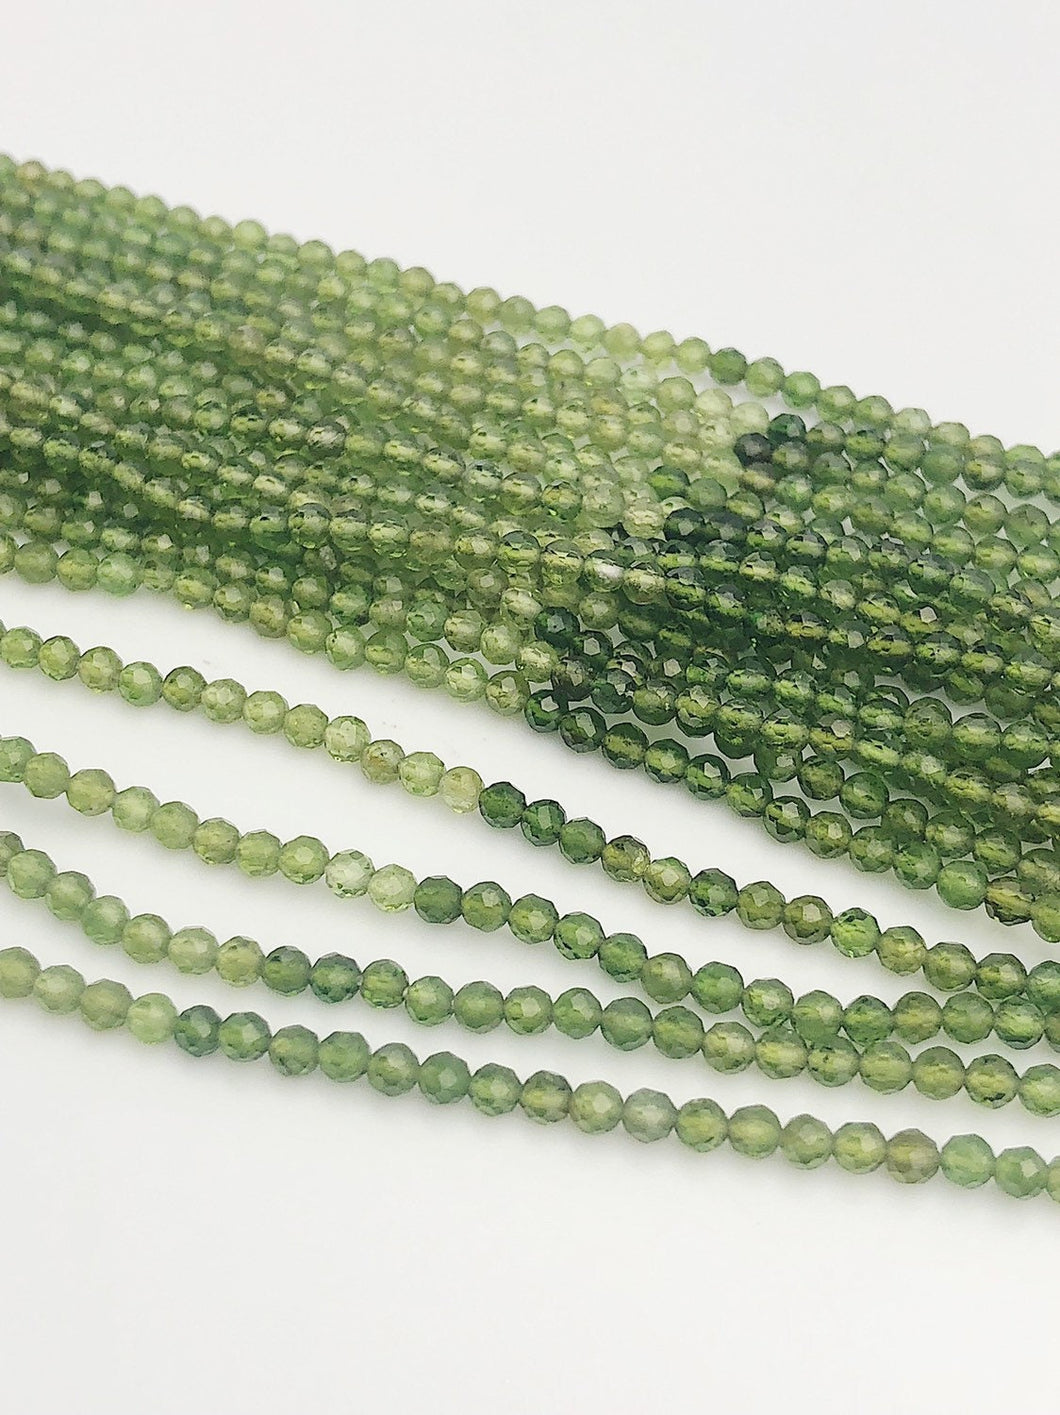 HALF OFF SALE - Green Tourmaline Gemstone Beads, Full Strand, Semi Precious Gemstone, 13